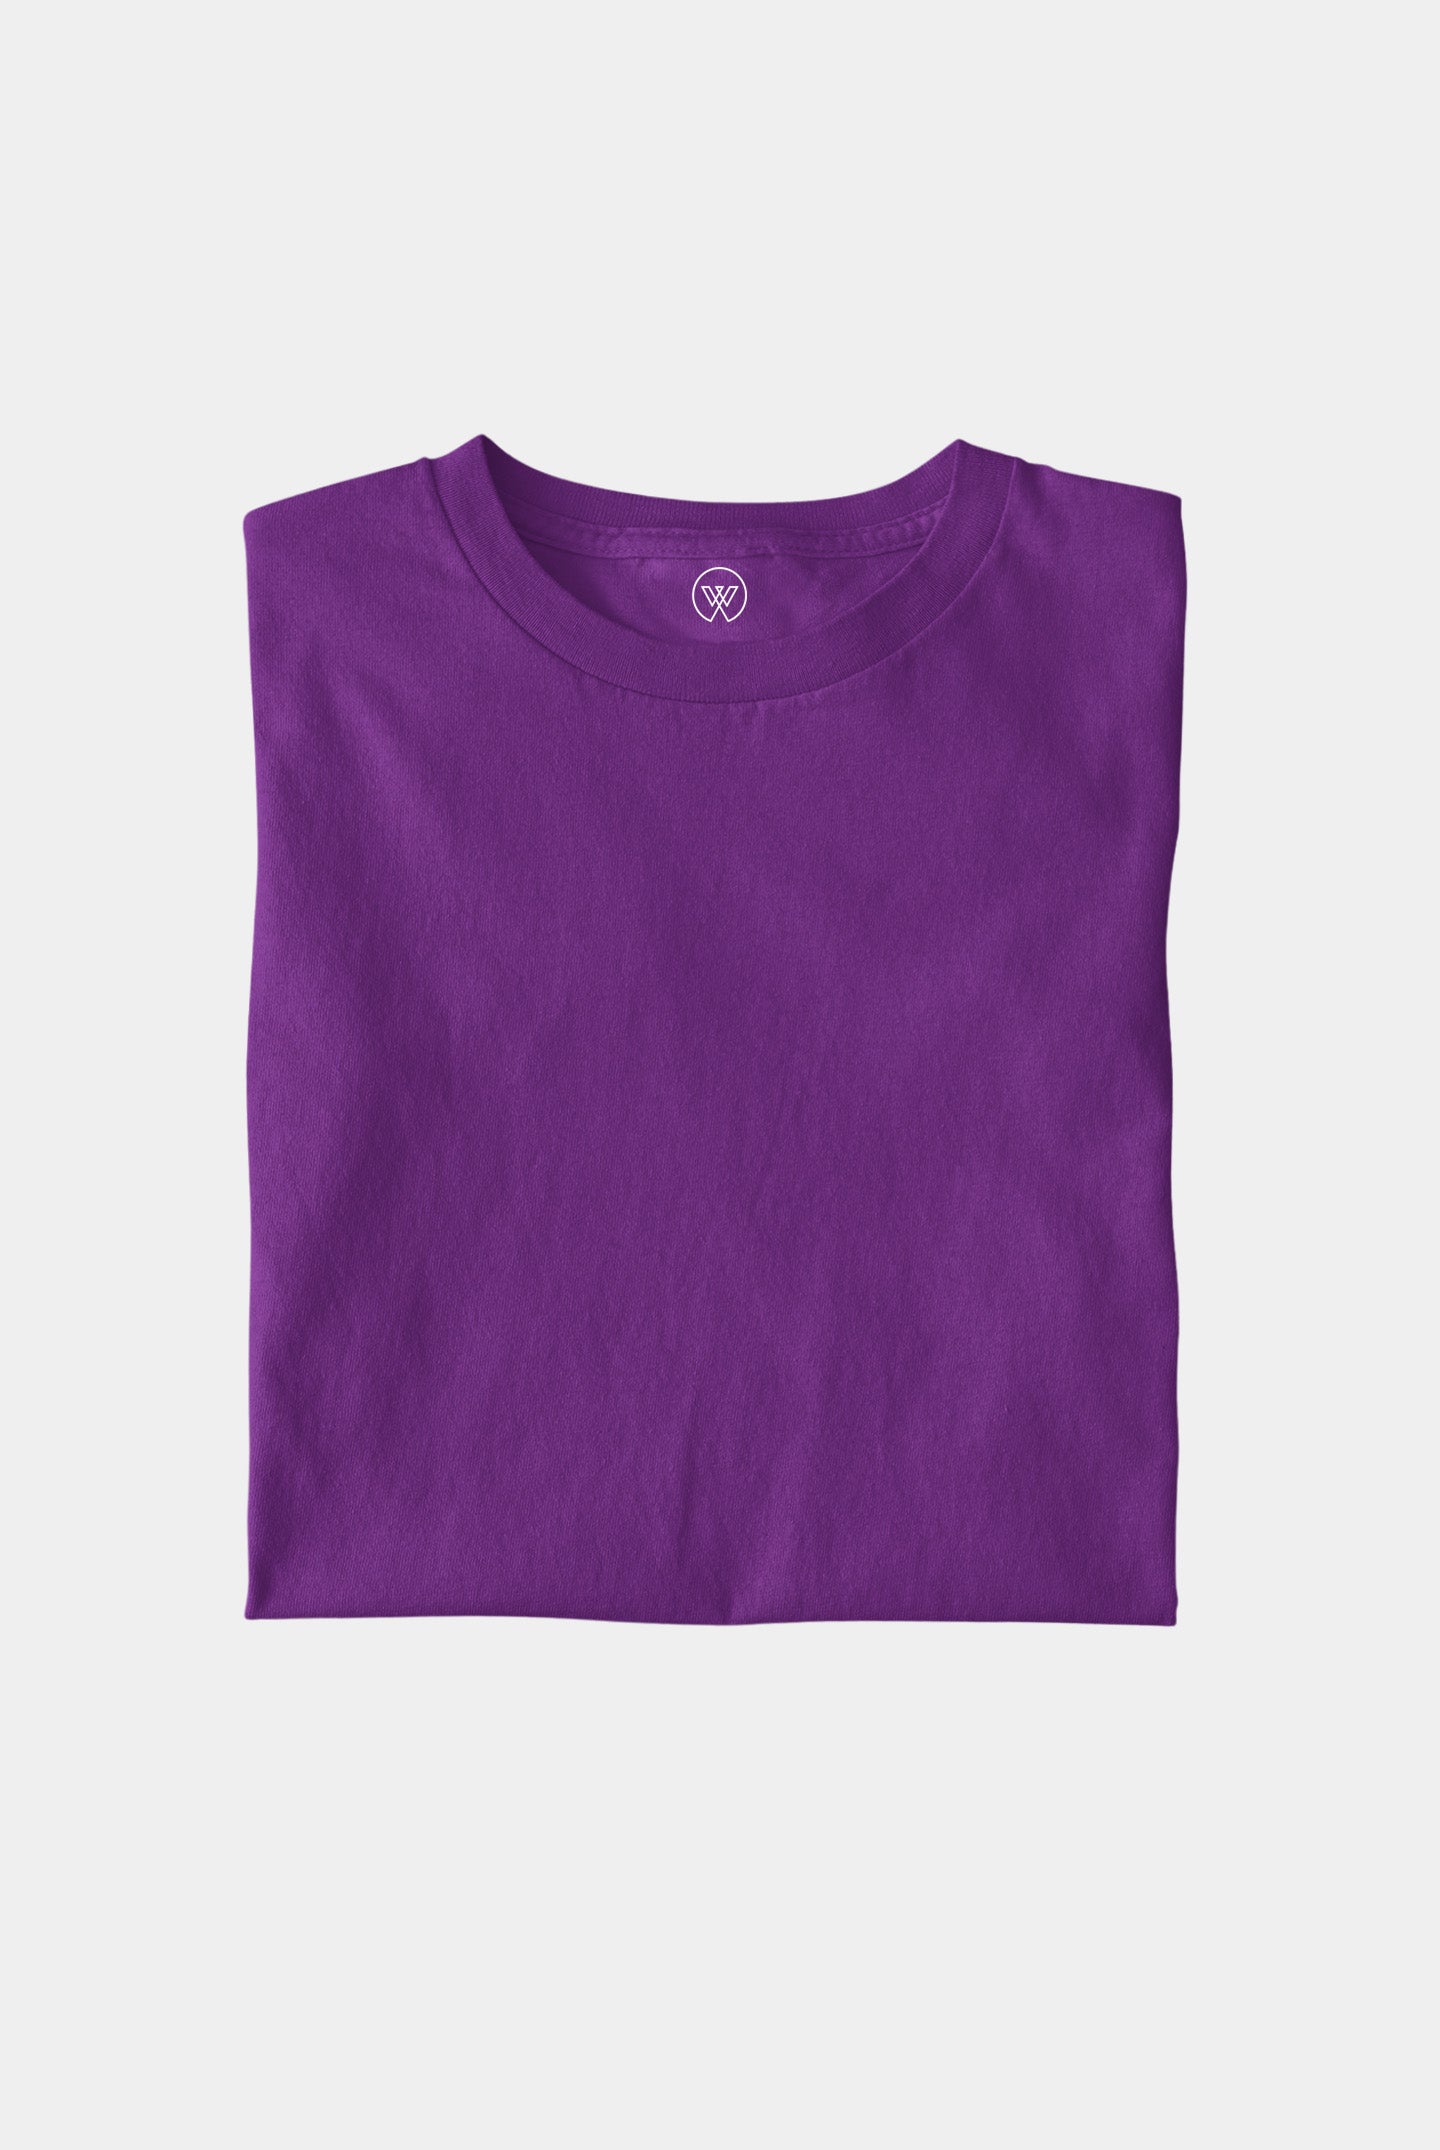 Purple Unisex T-Shirt